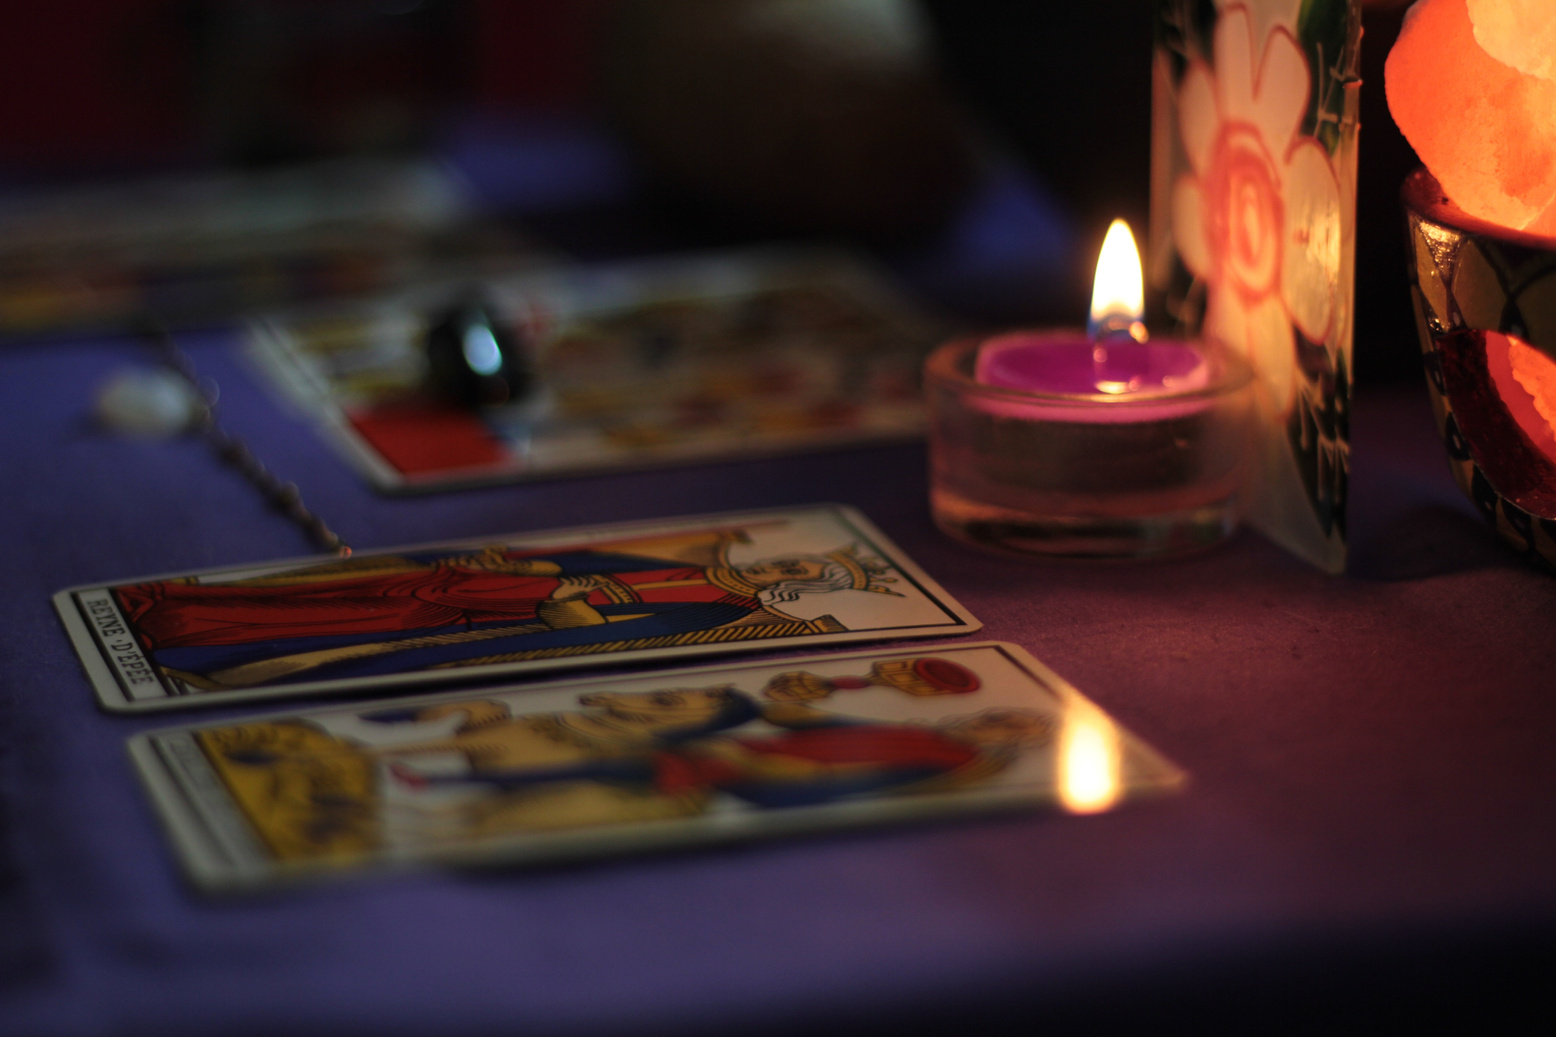 Tarot Cards on the Table